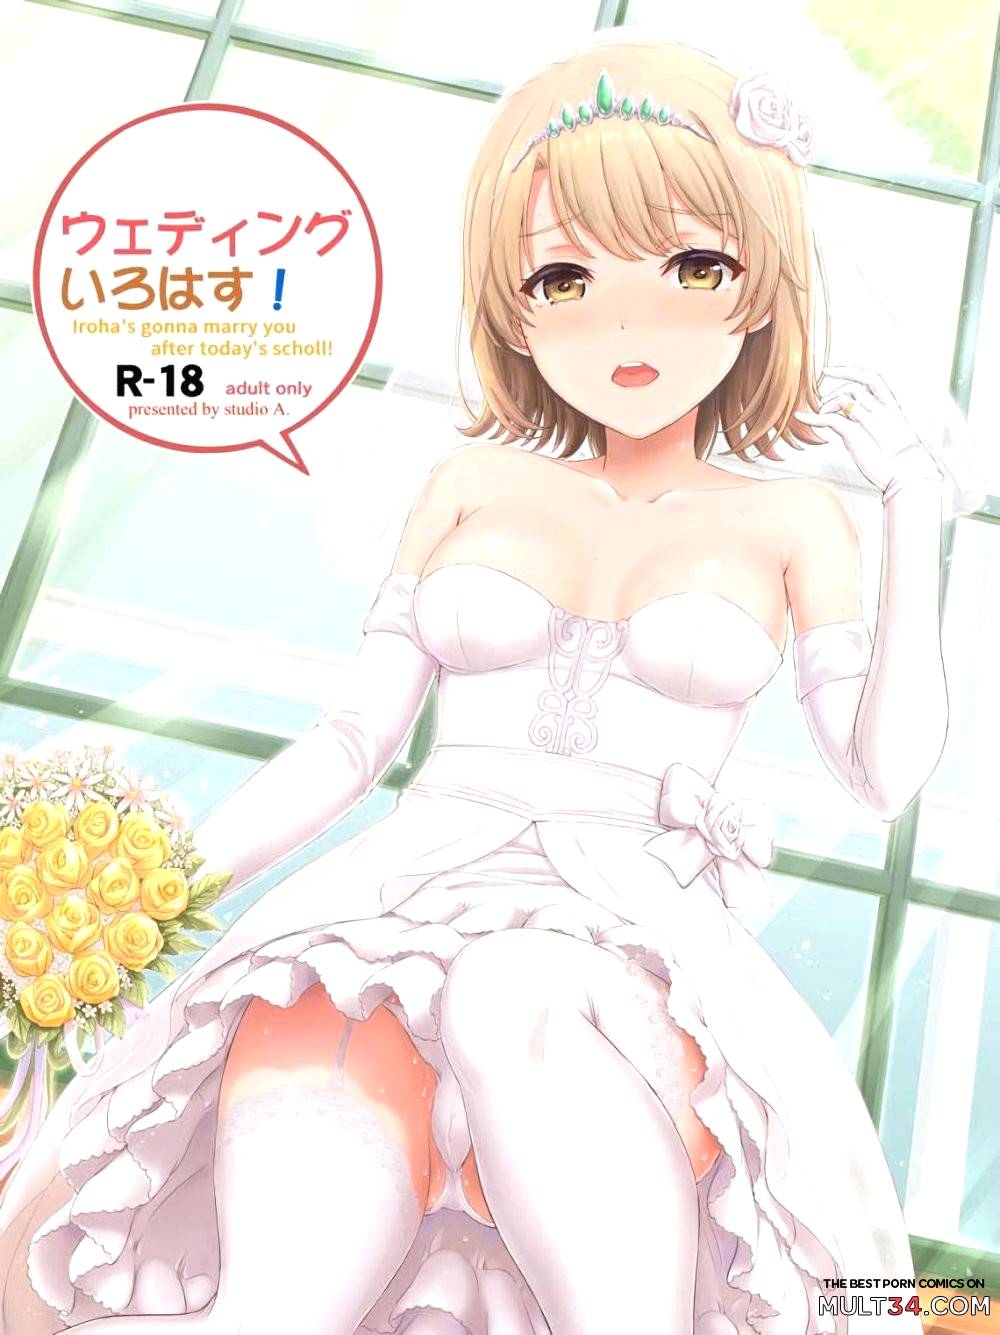 Wedding Irohasu! - Iroha's gonna marry you after today's scholl! page 1